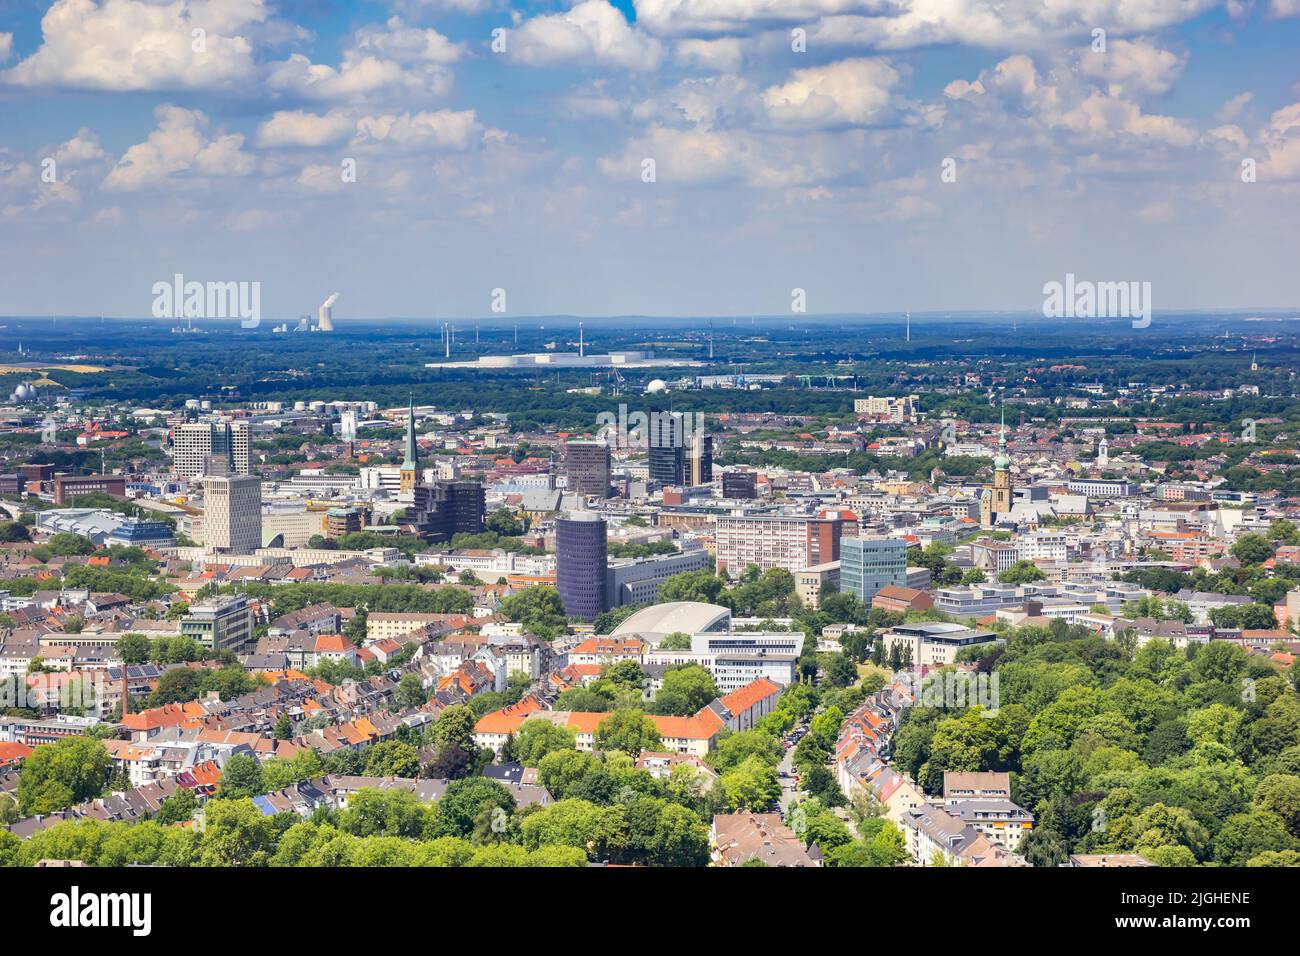 Vista aérea del centro histórico de Dortmund, Alemania Foto de stock